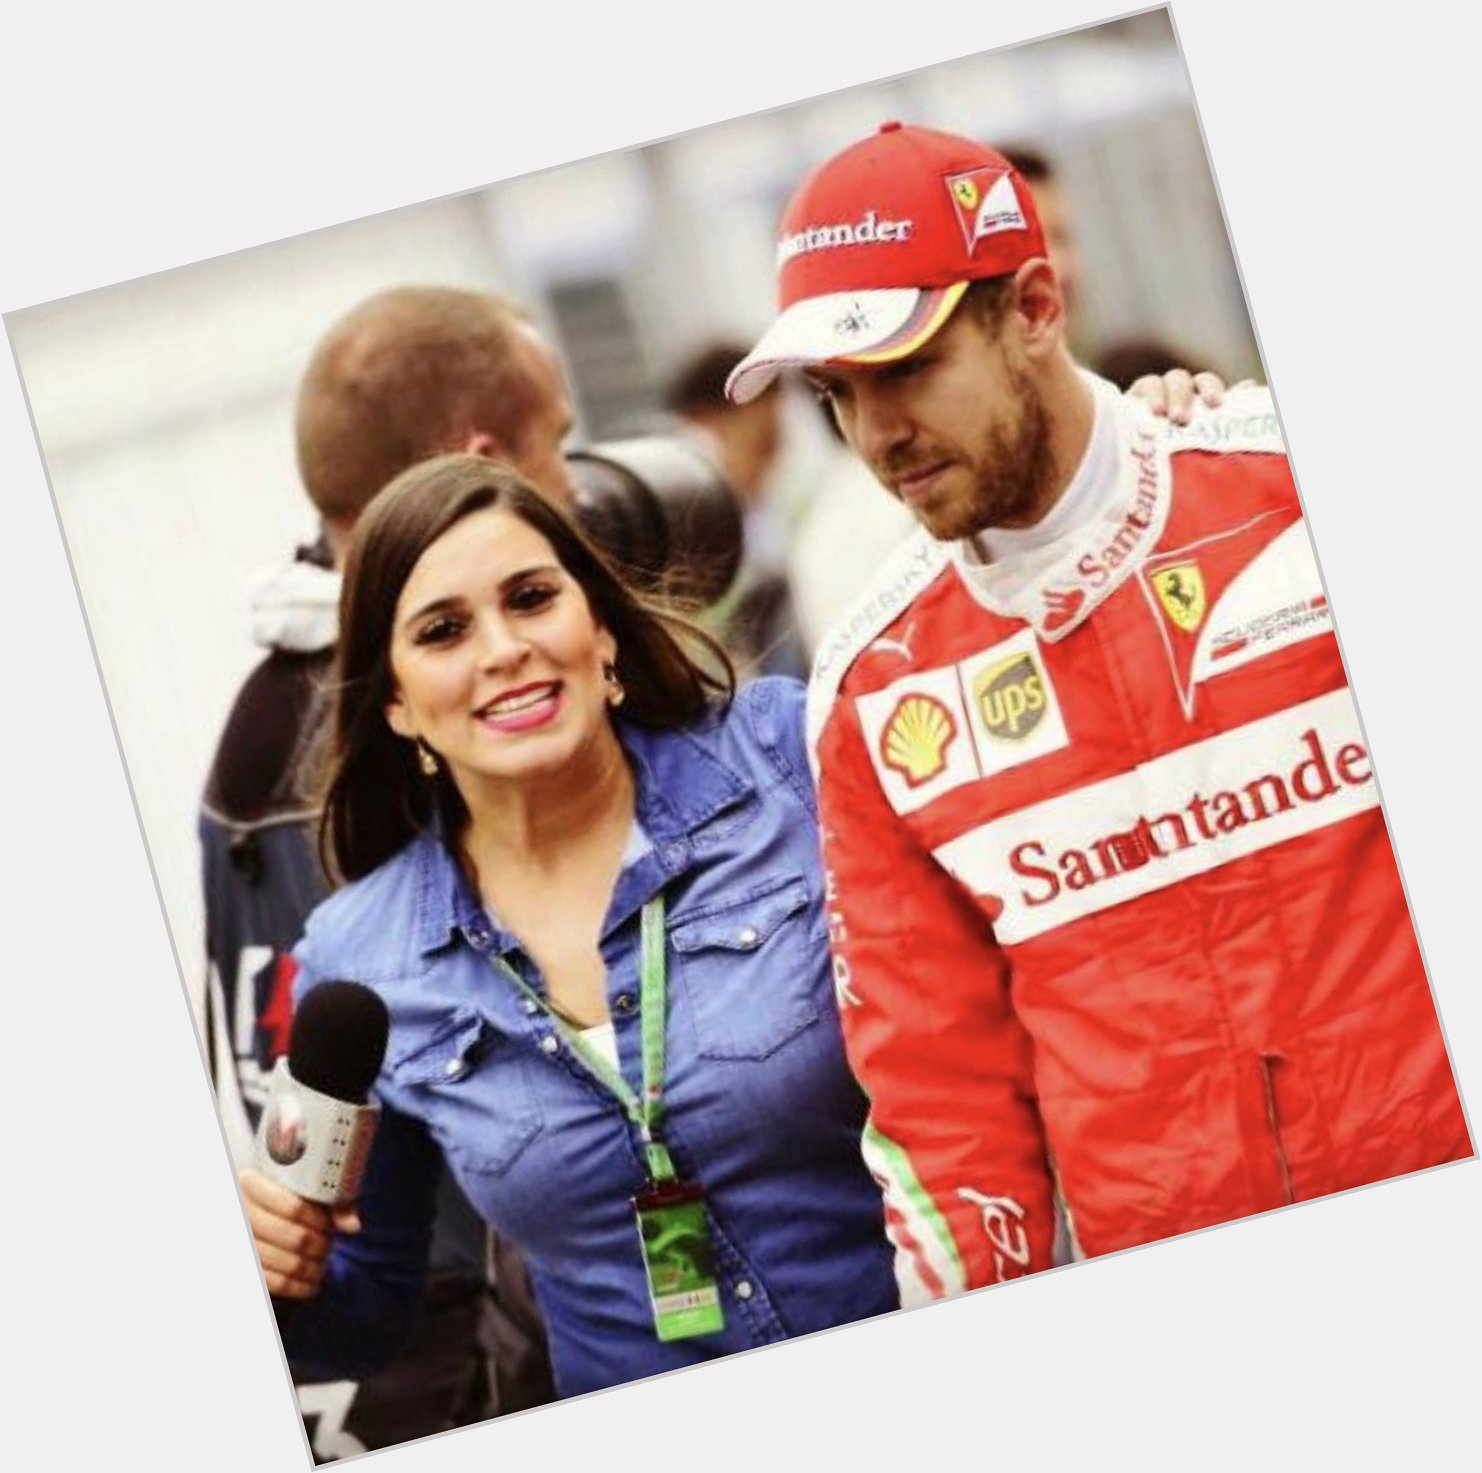 Happy bday Sebastian Vettel!  